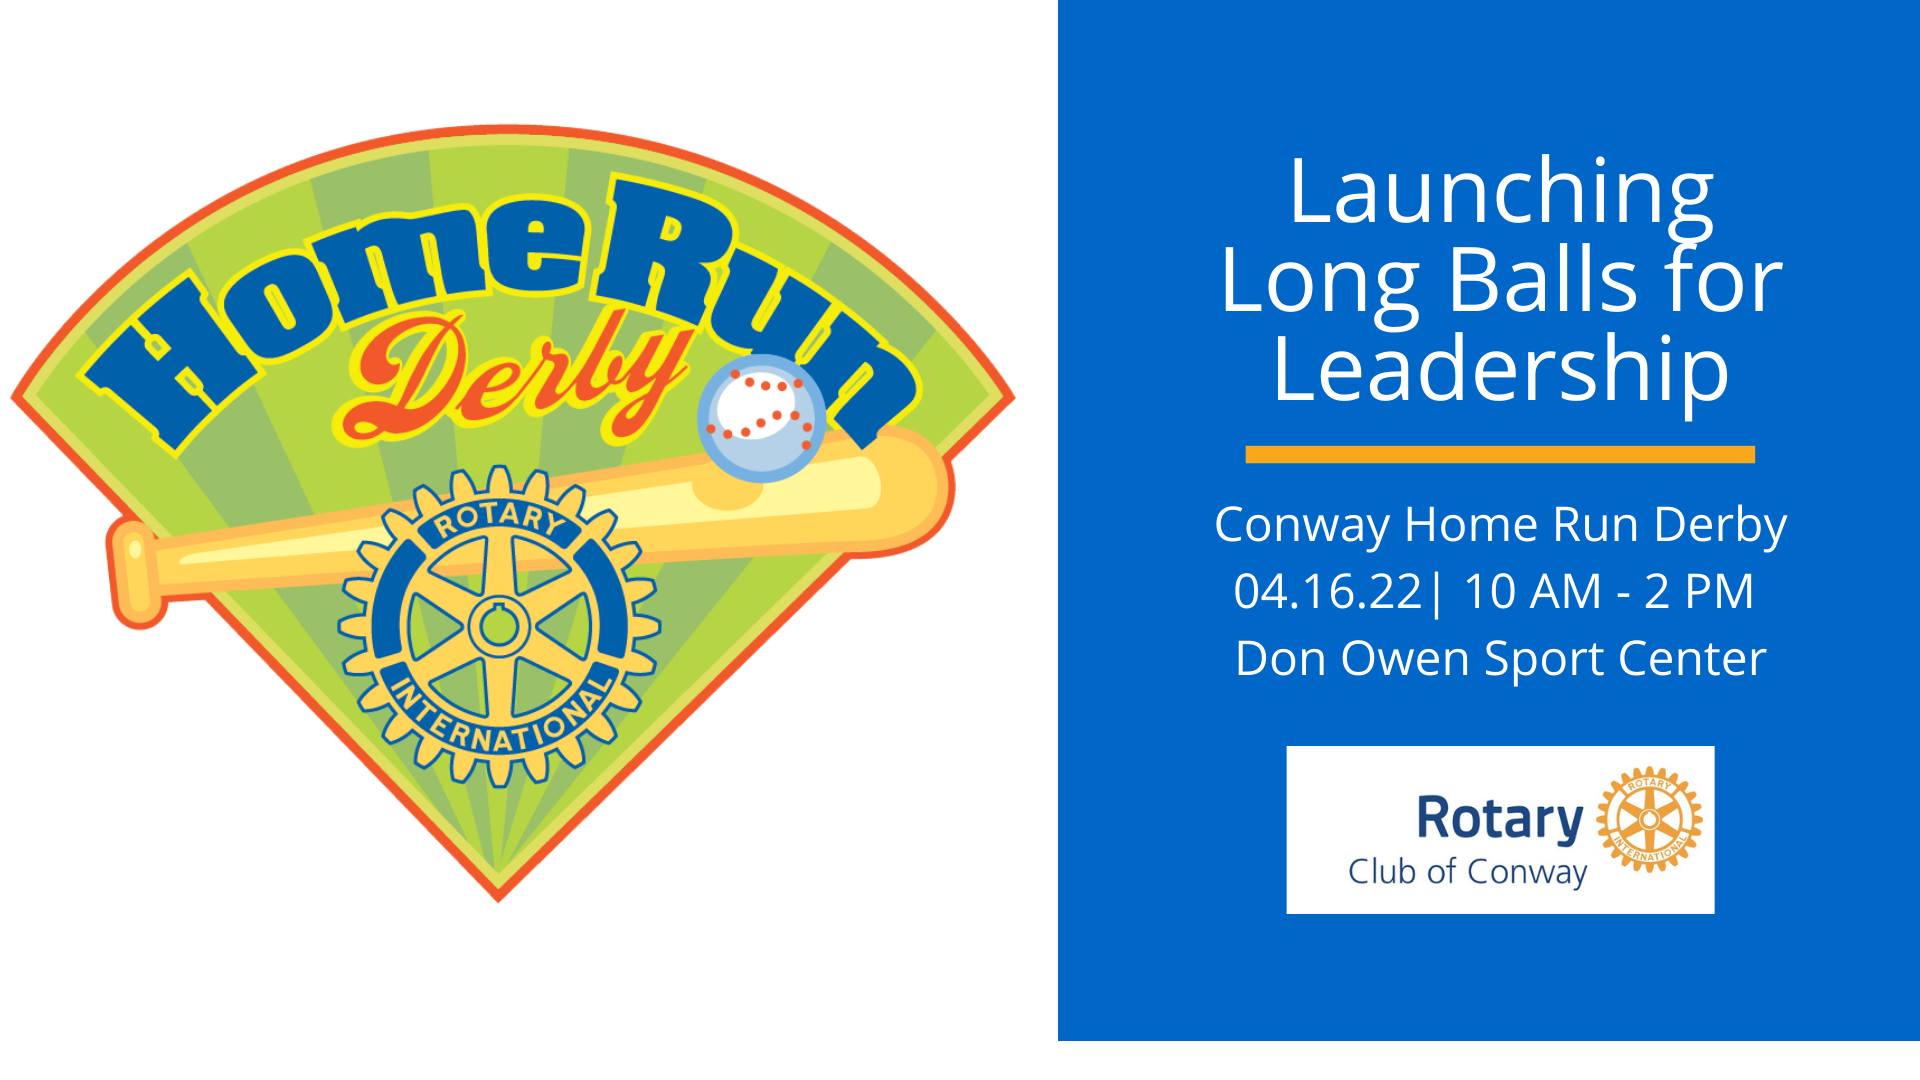 Conway Home Run Derby